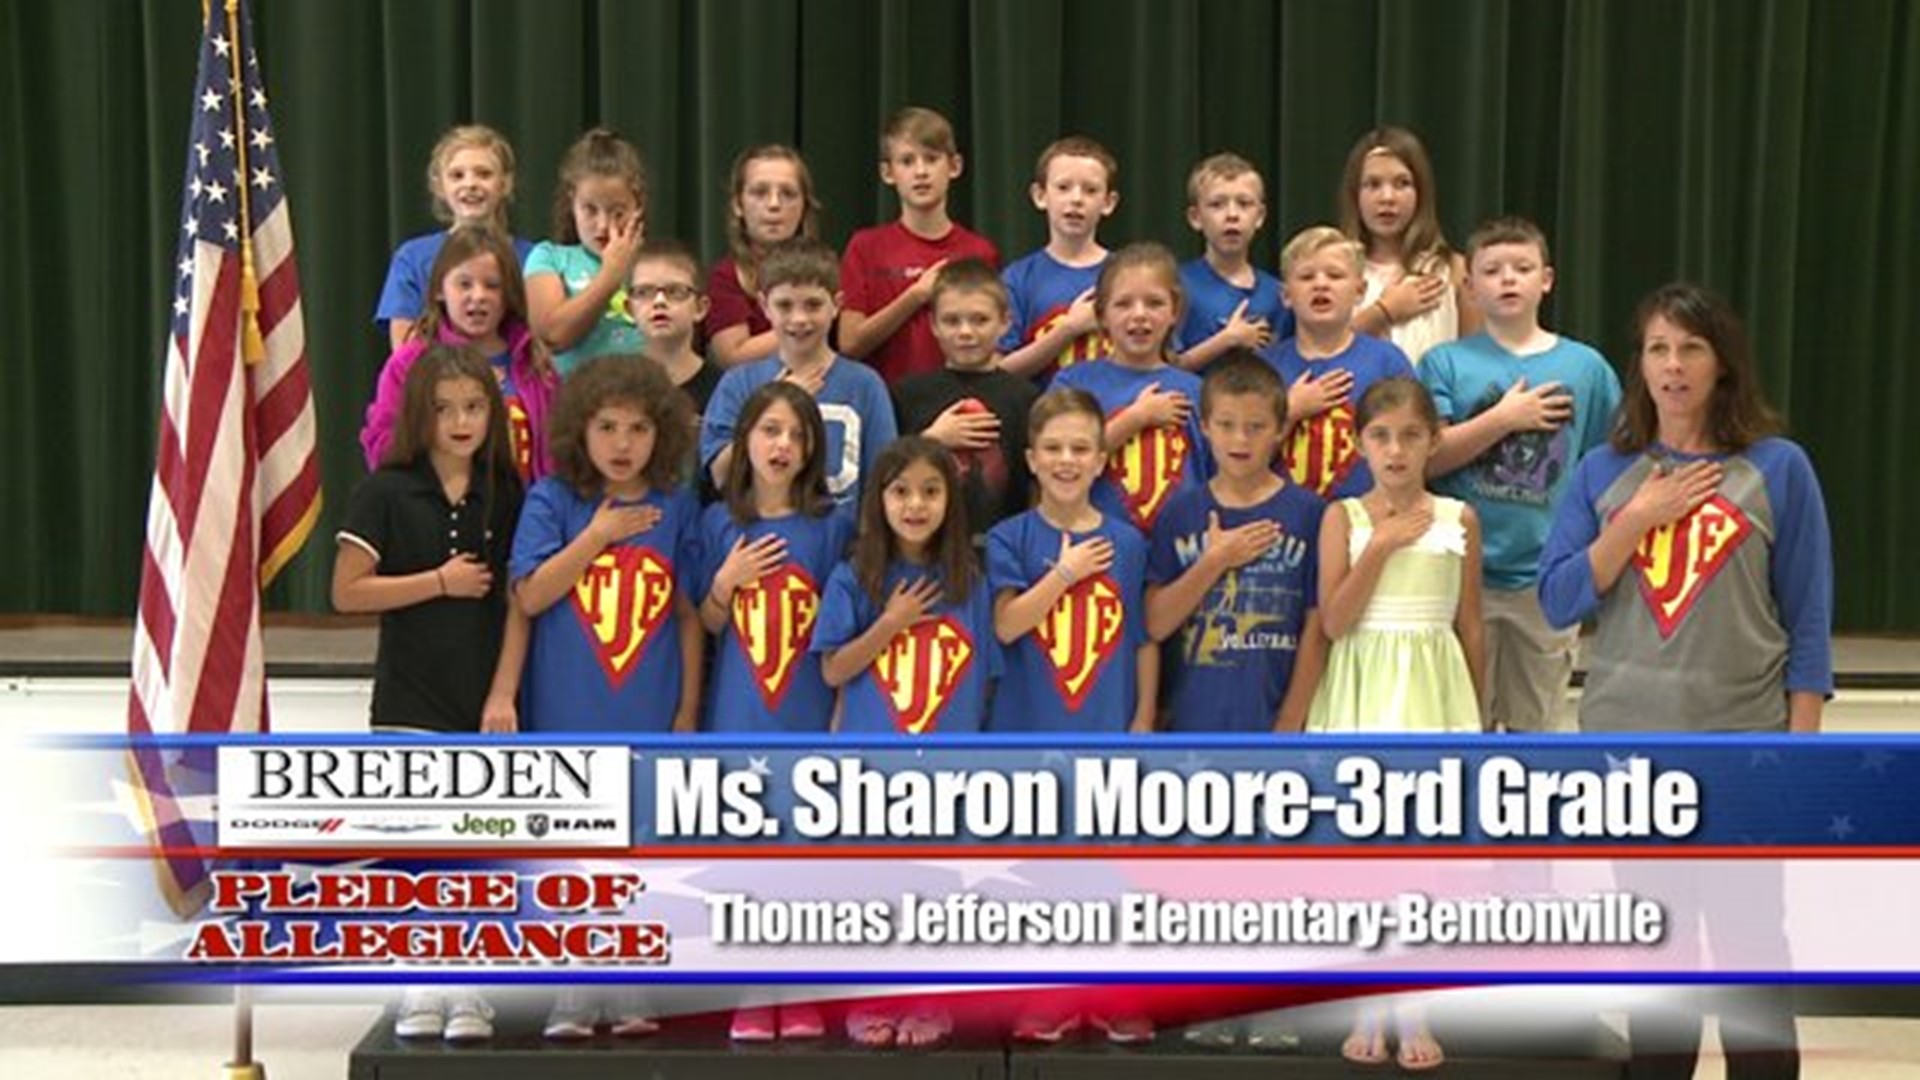 Thomas Jefferson Elementary - Bentonville - Ms. Sharon Moore - 3rd Grade